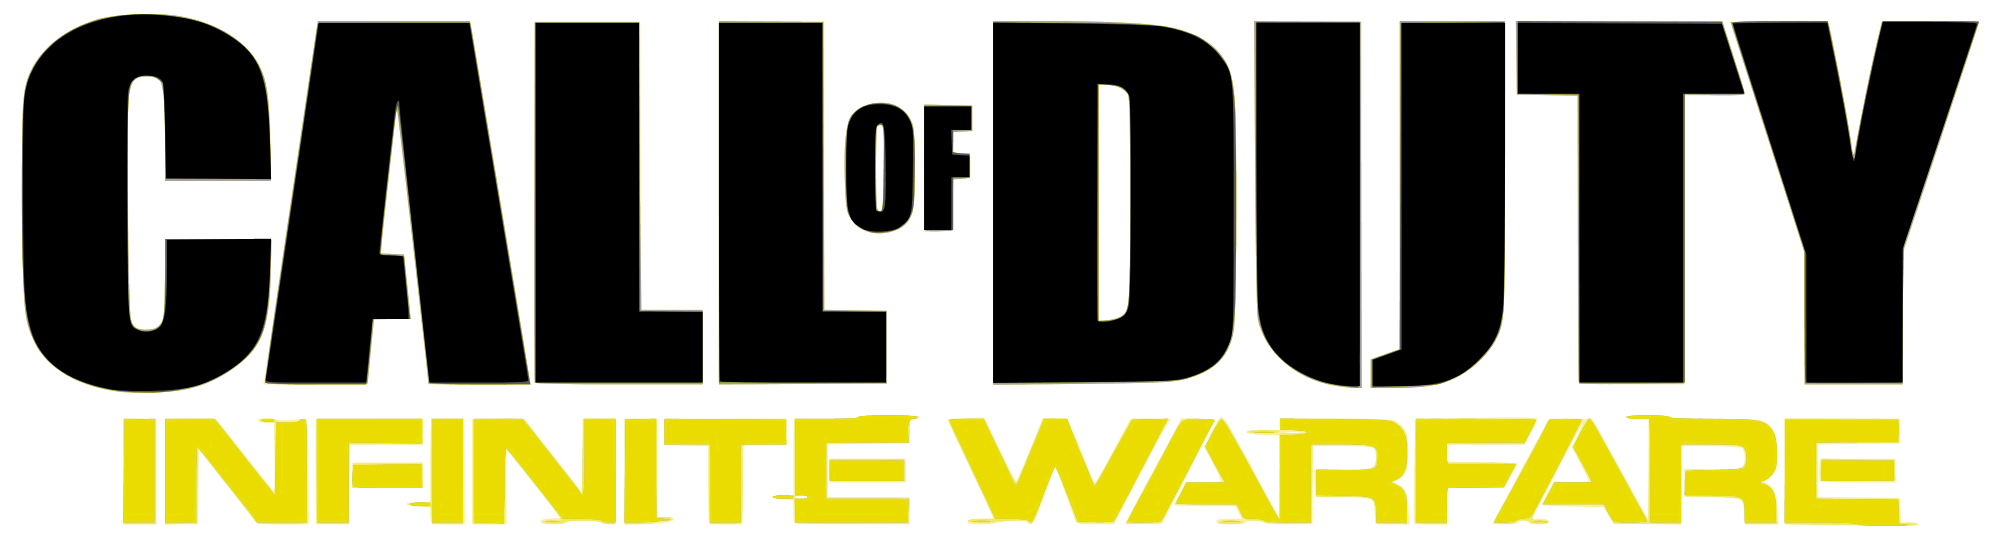 File:Logo Call of Duty WWII zweifarbig.svg - Wikimedia Commons